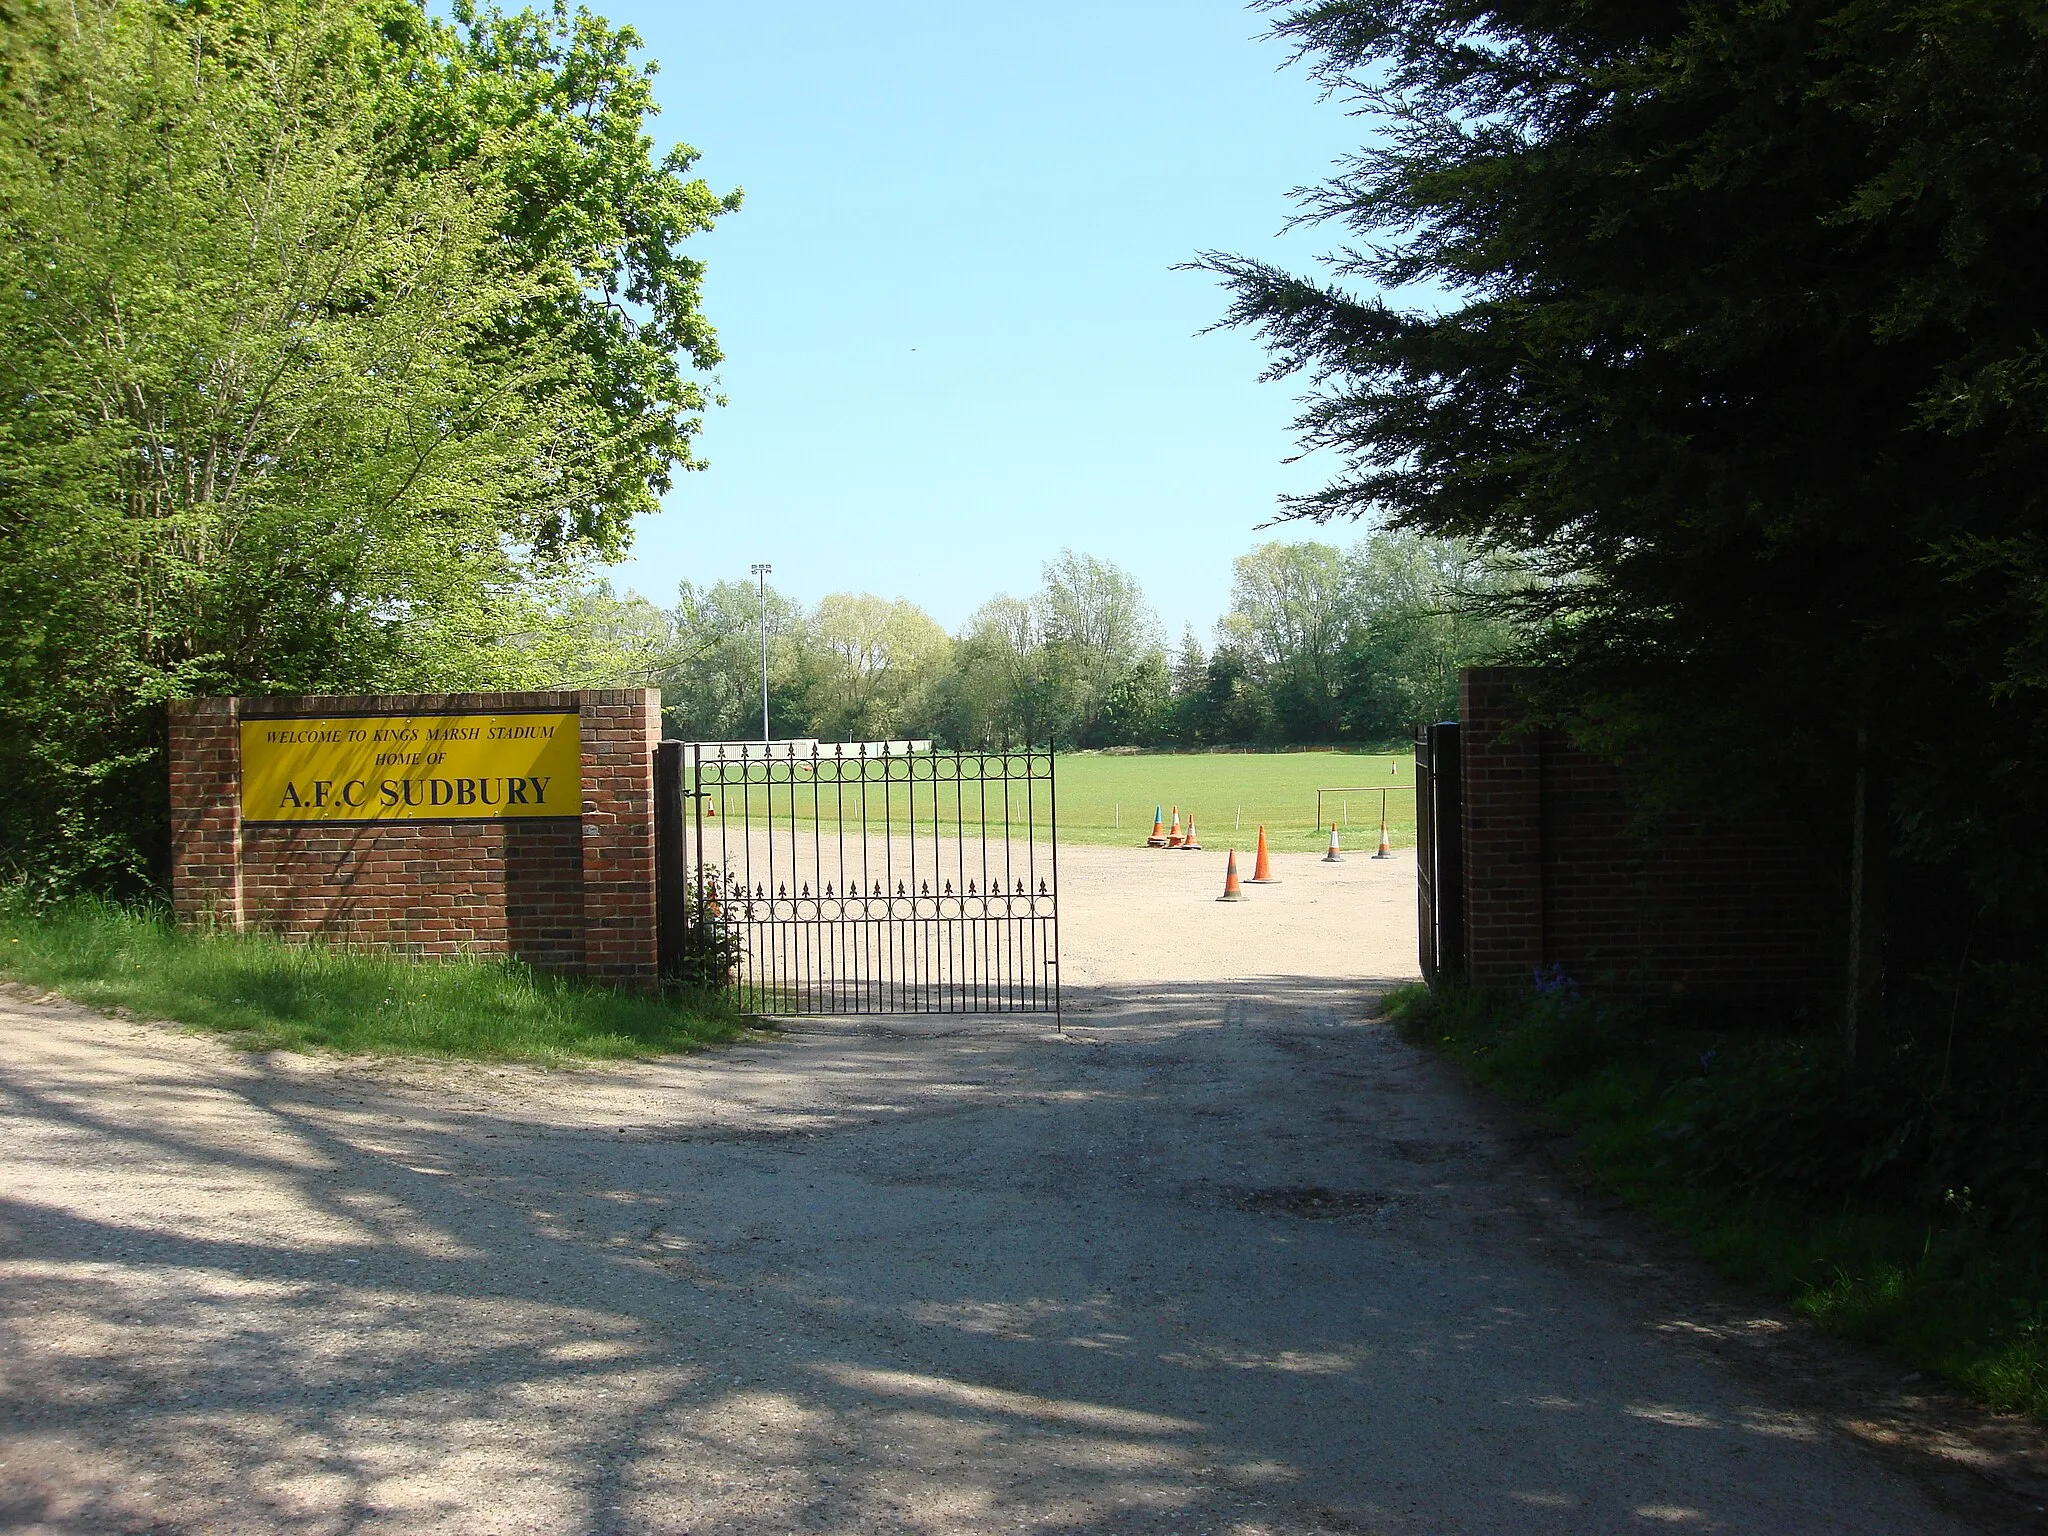 Photo showing: Entrance to Kings Marsh Stadium home of A.F.C Sudbury